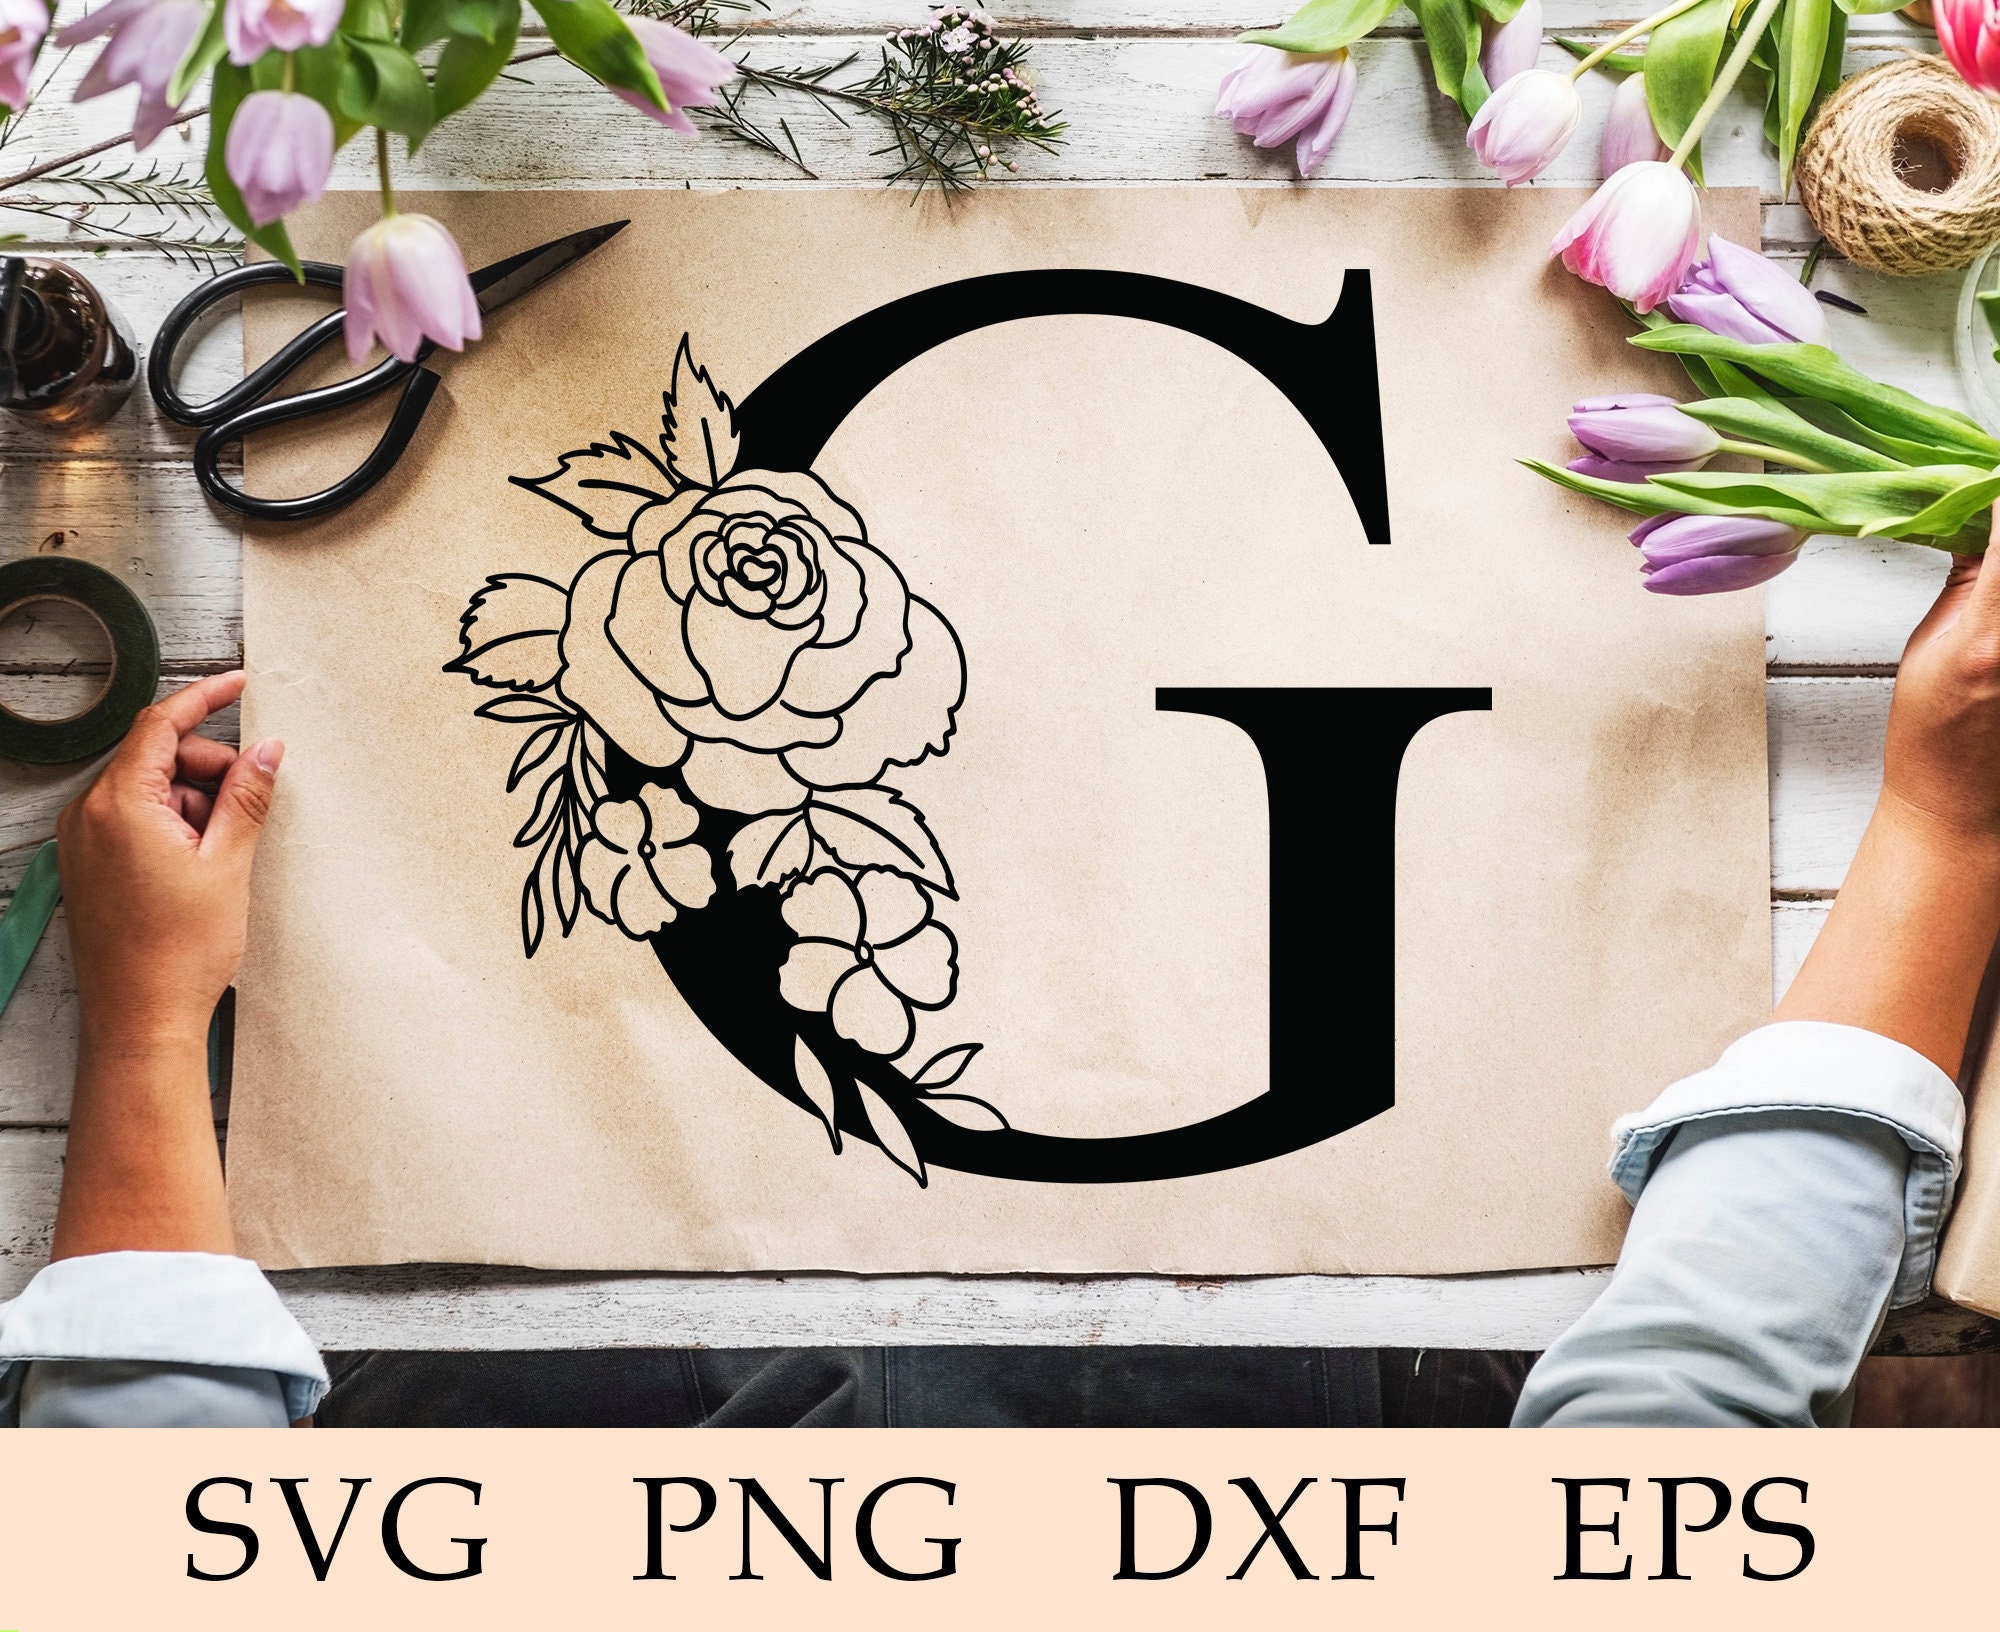 Floral letter G svg, Initial letter G with flower, Monogram